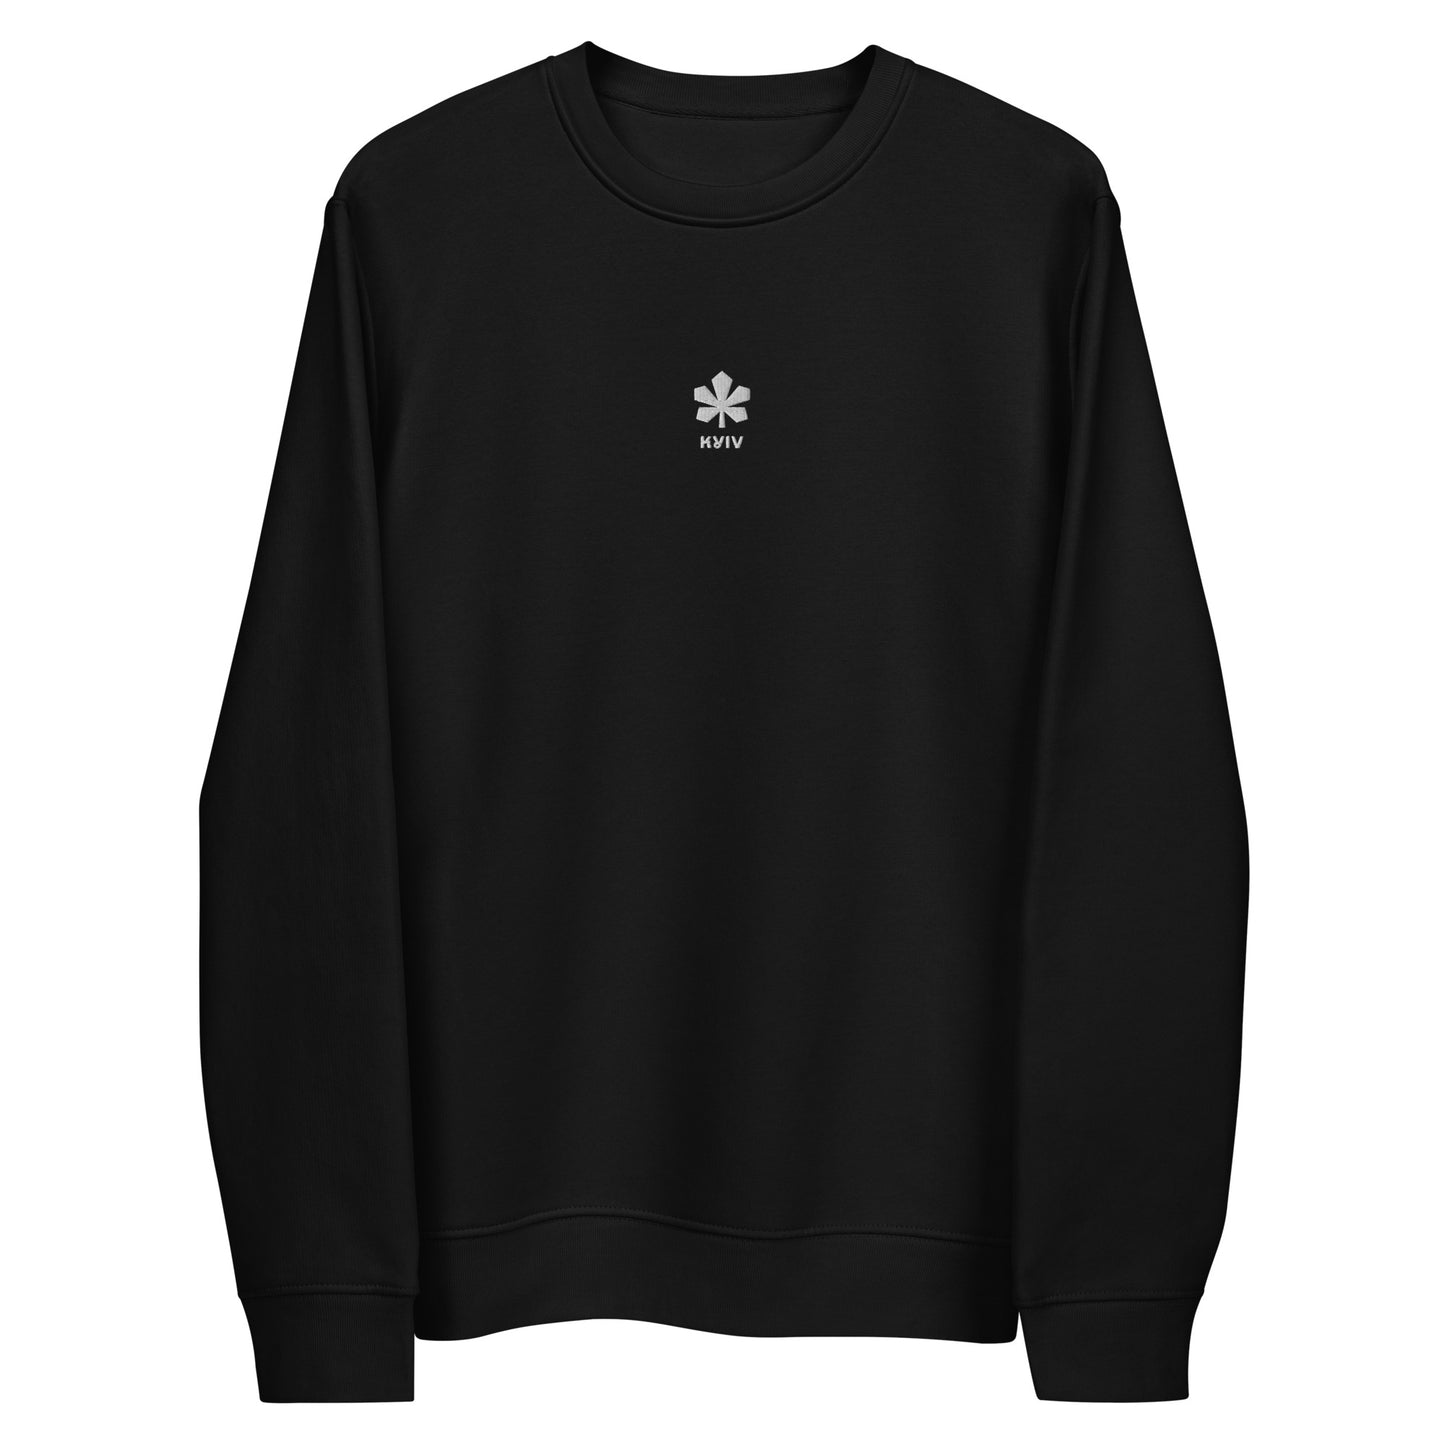 Kashtan unisex eco sweatshirt with embroidery in black